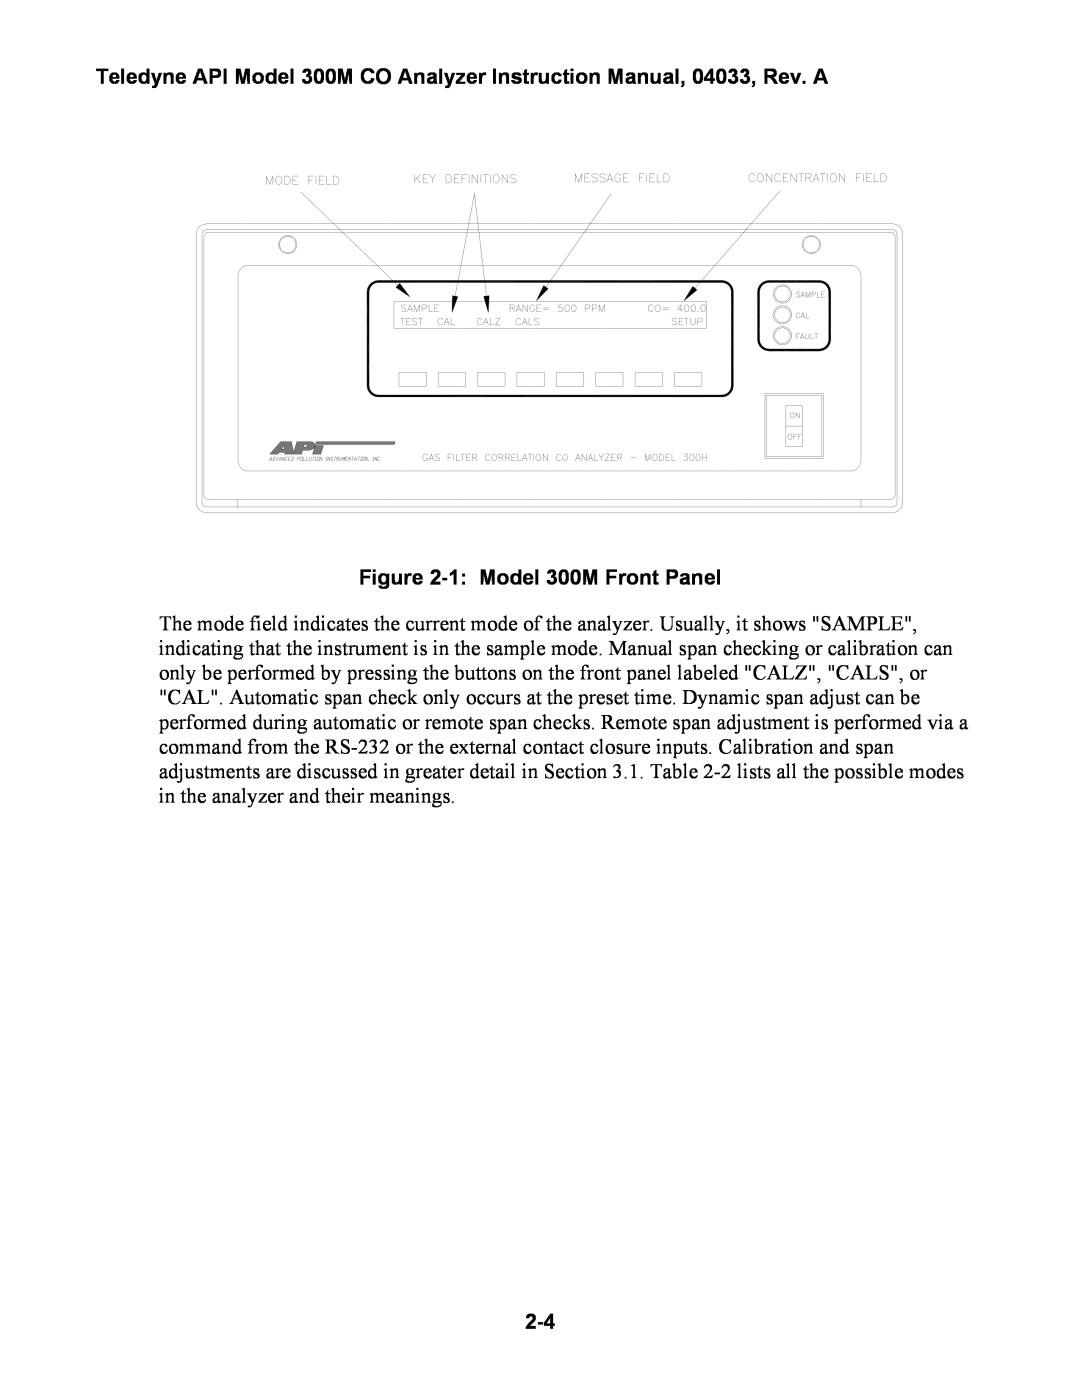 Teledyne instruction manual 1 Model 300M Front Panel 